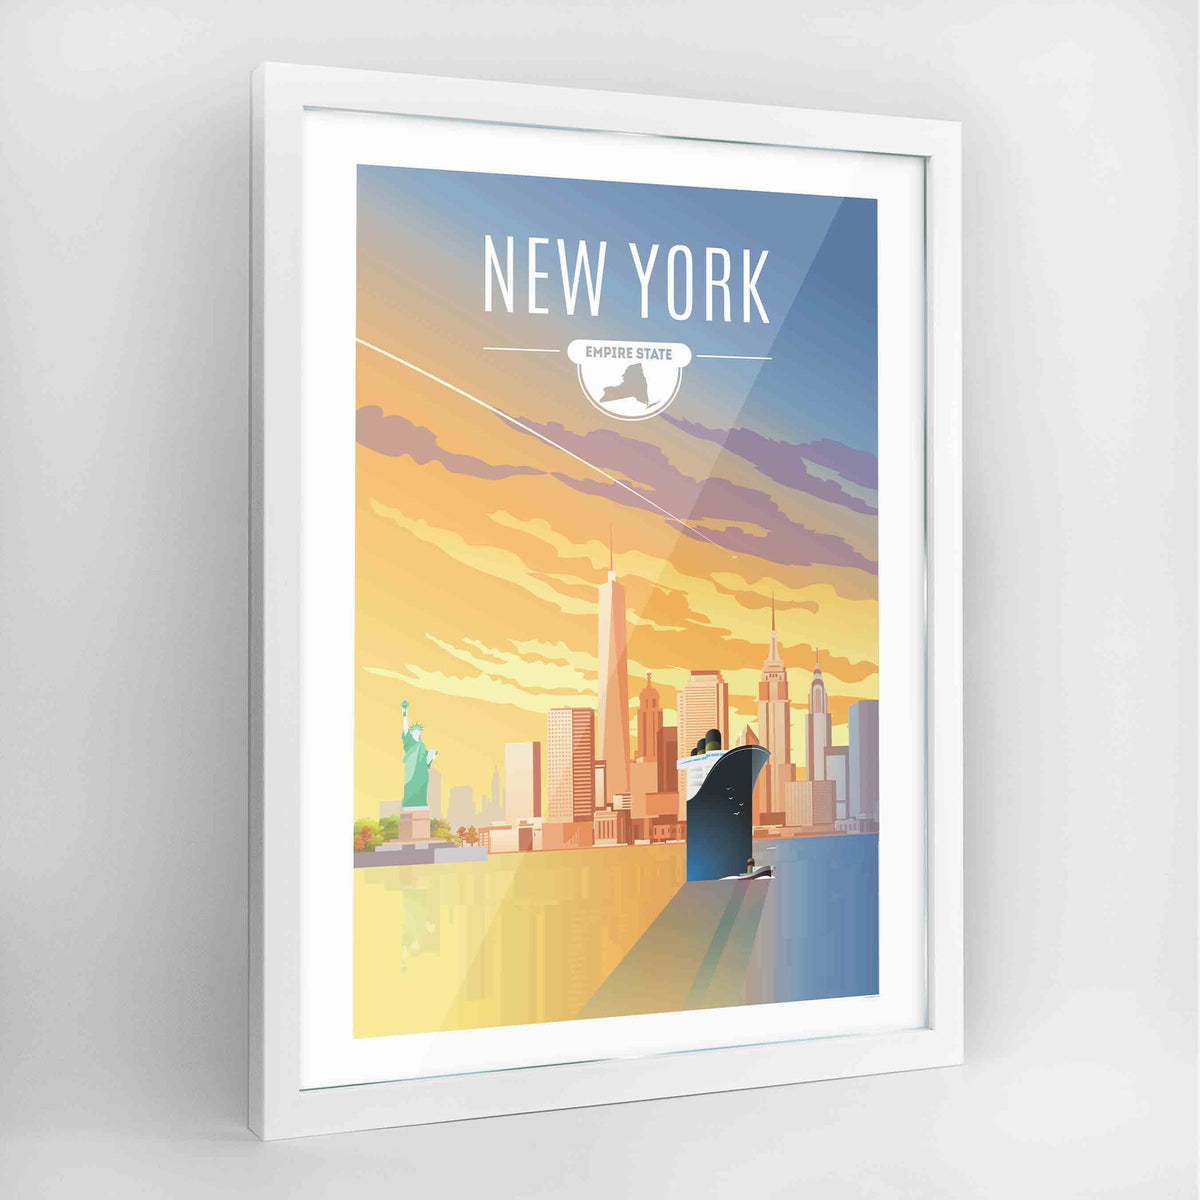 New York State CAD Frame Print